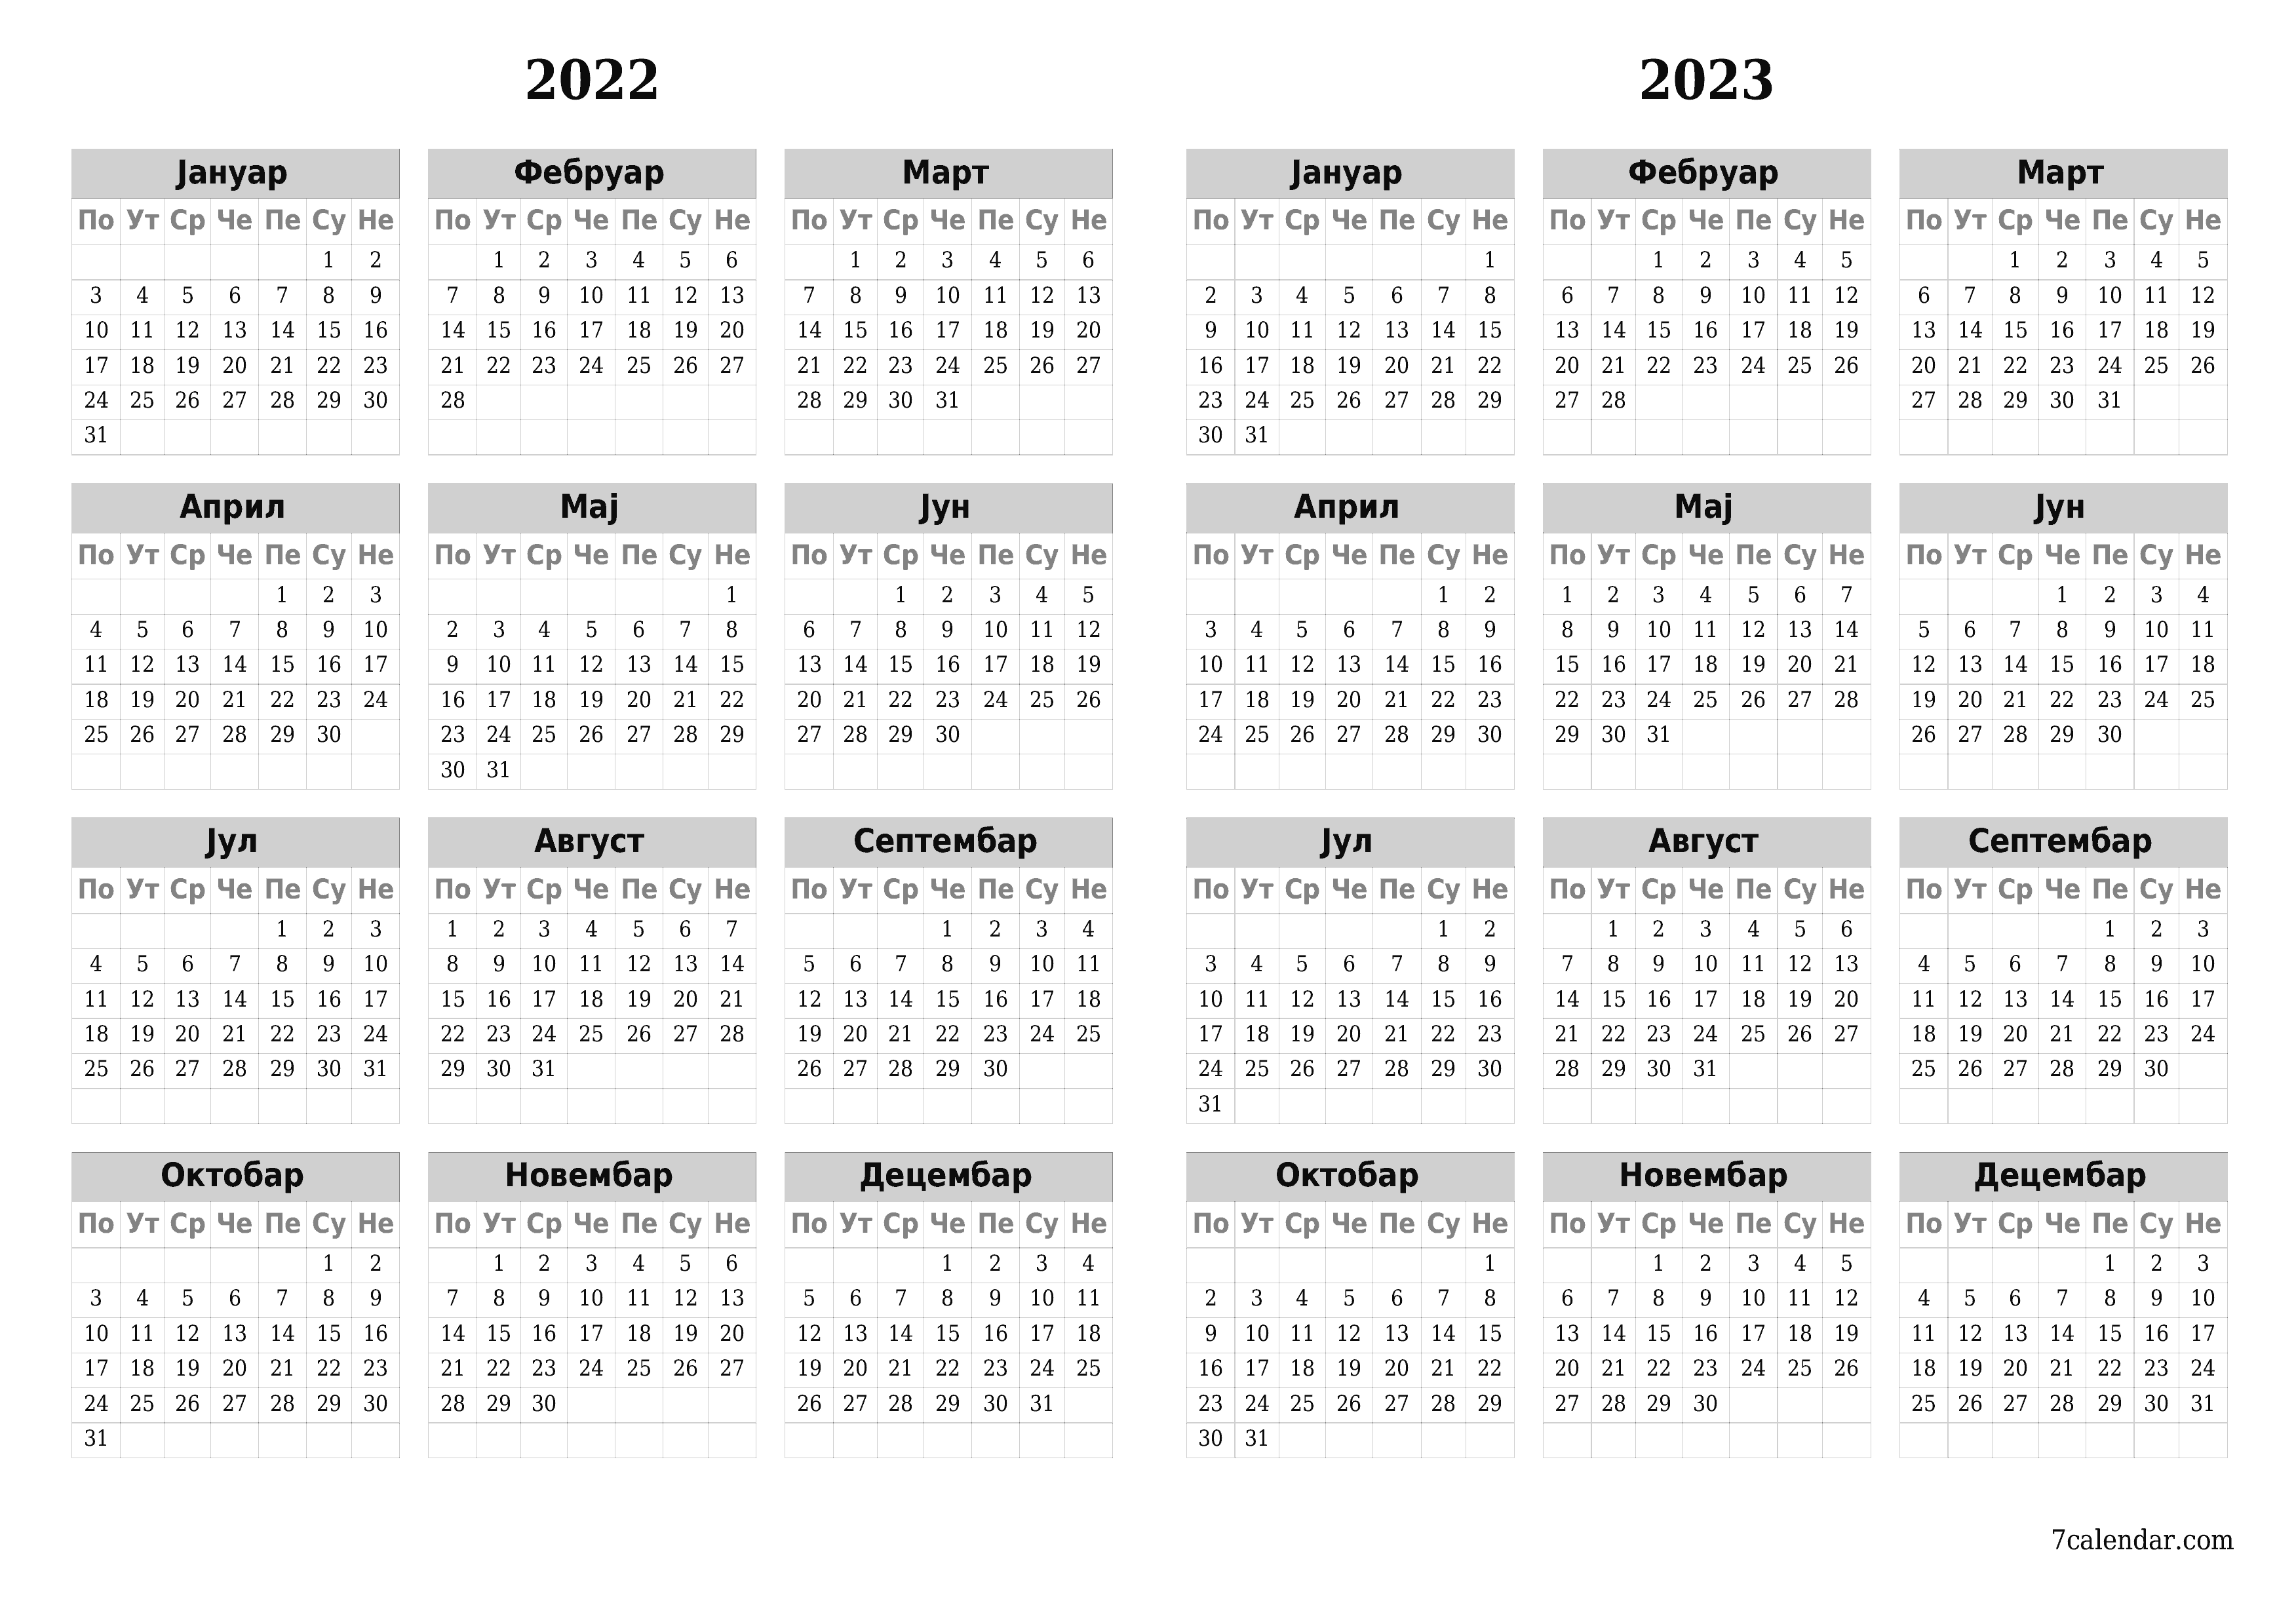  за штампање зидни шаблон а бесплатни хоризонталниј Годишње календар Август (Авг) 2022